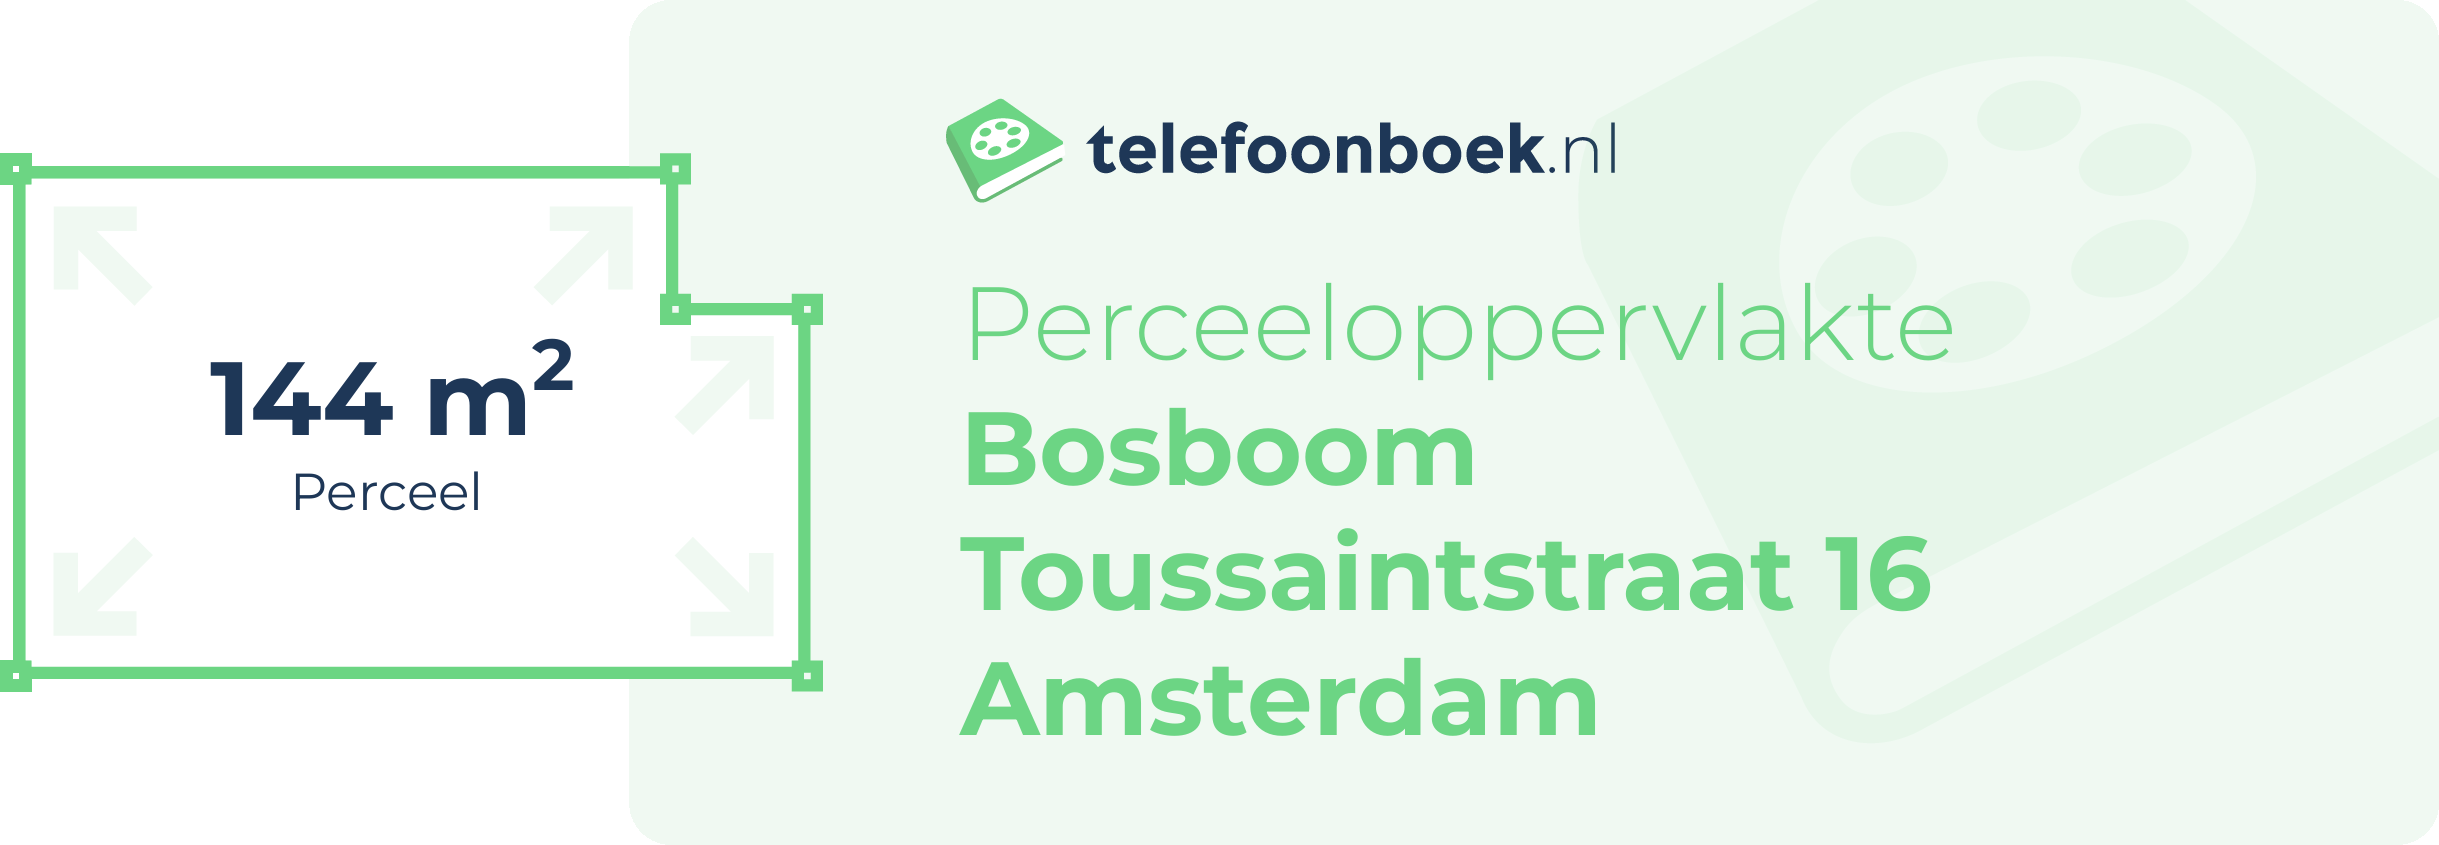 Perceeloppervlakte Bosboom Toussaintstraat 16 Amsterdam